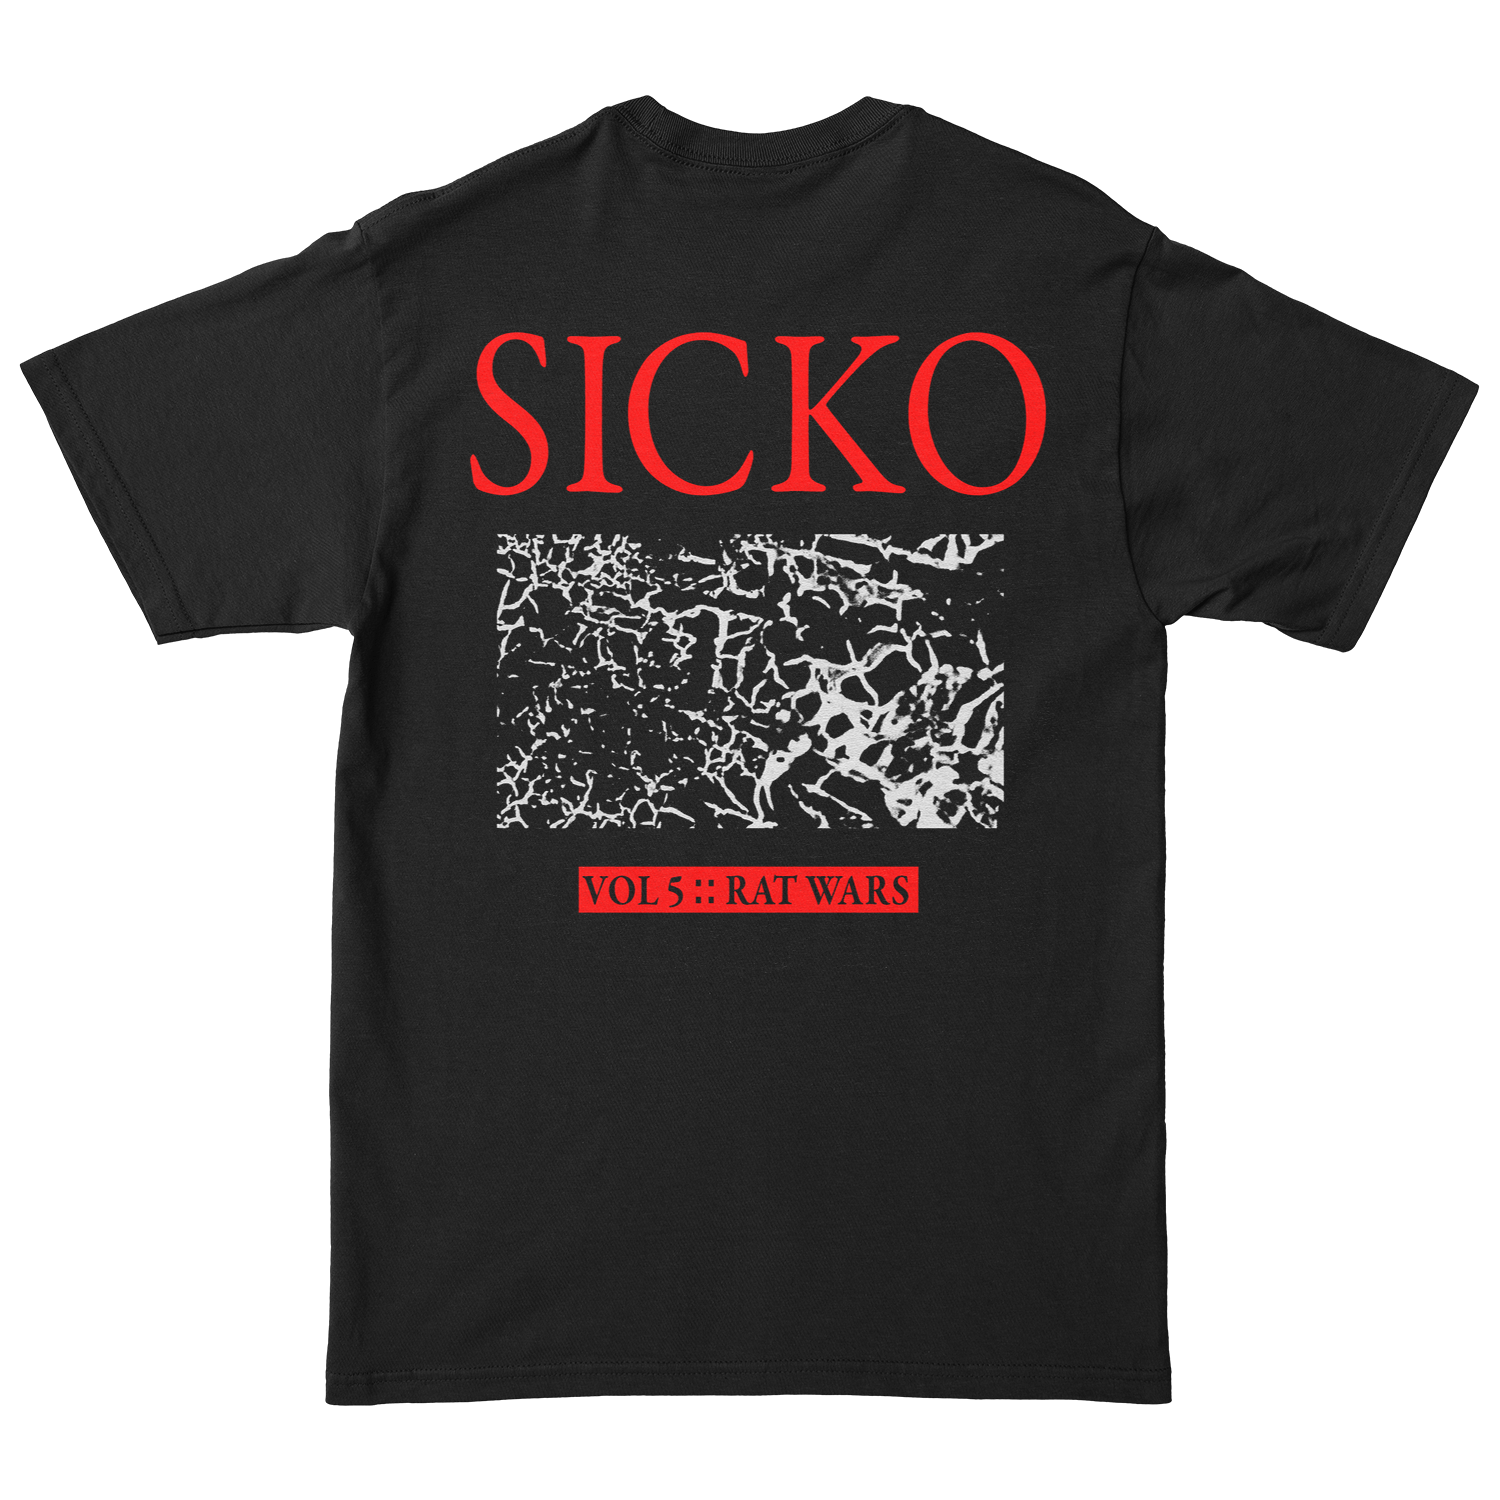 HEALTH "SICKO" Black T-Shirt